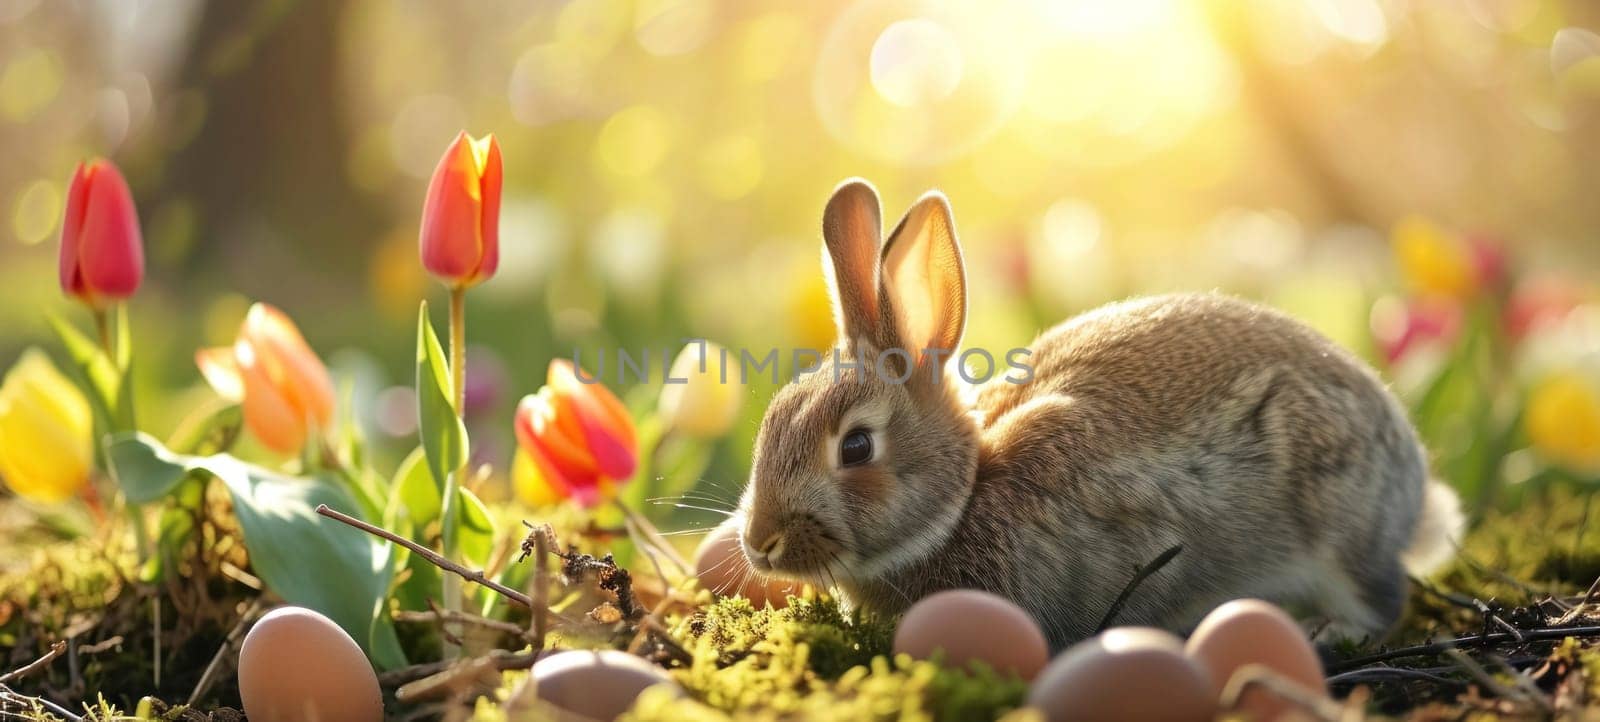 Springtime Bunny in Sunlit Flower Garden with Easter Eggs by andreyz